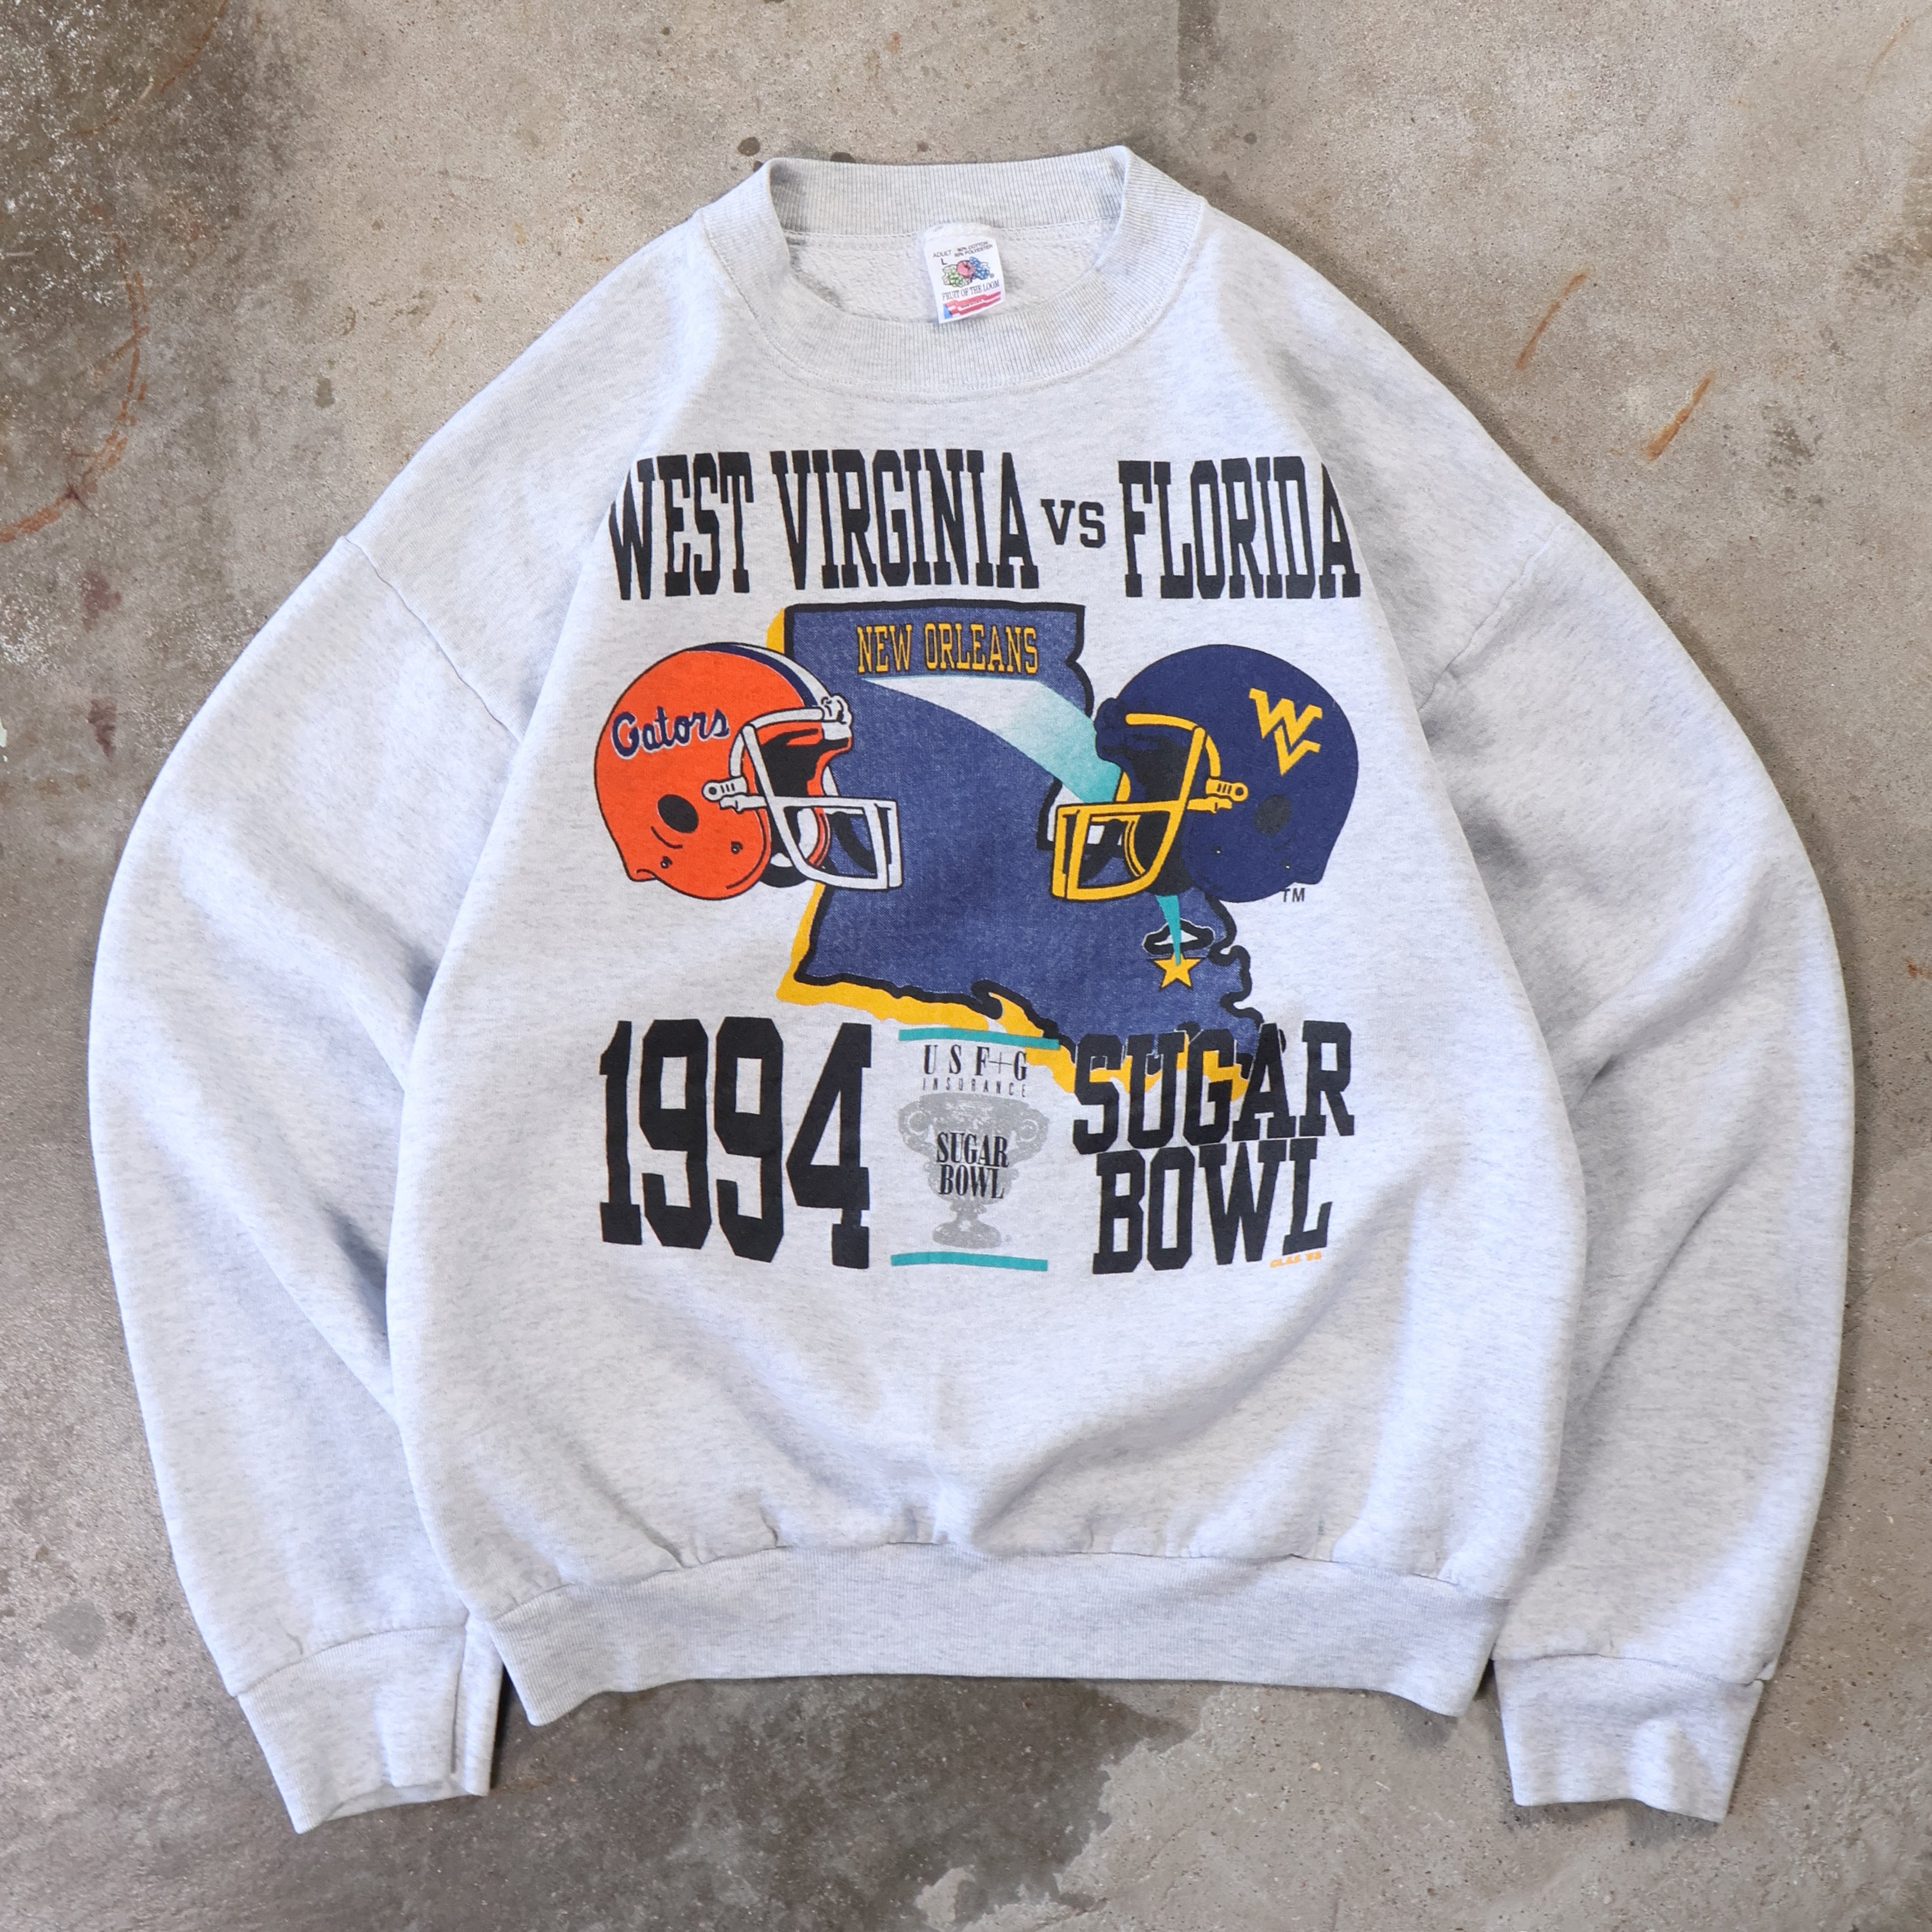 Sugar Bowl 1994 Florida vs West Virginia Sweatshirt (Medium)